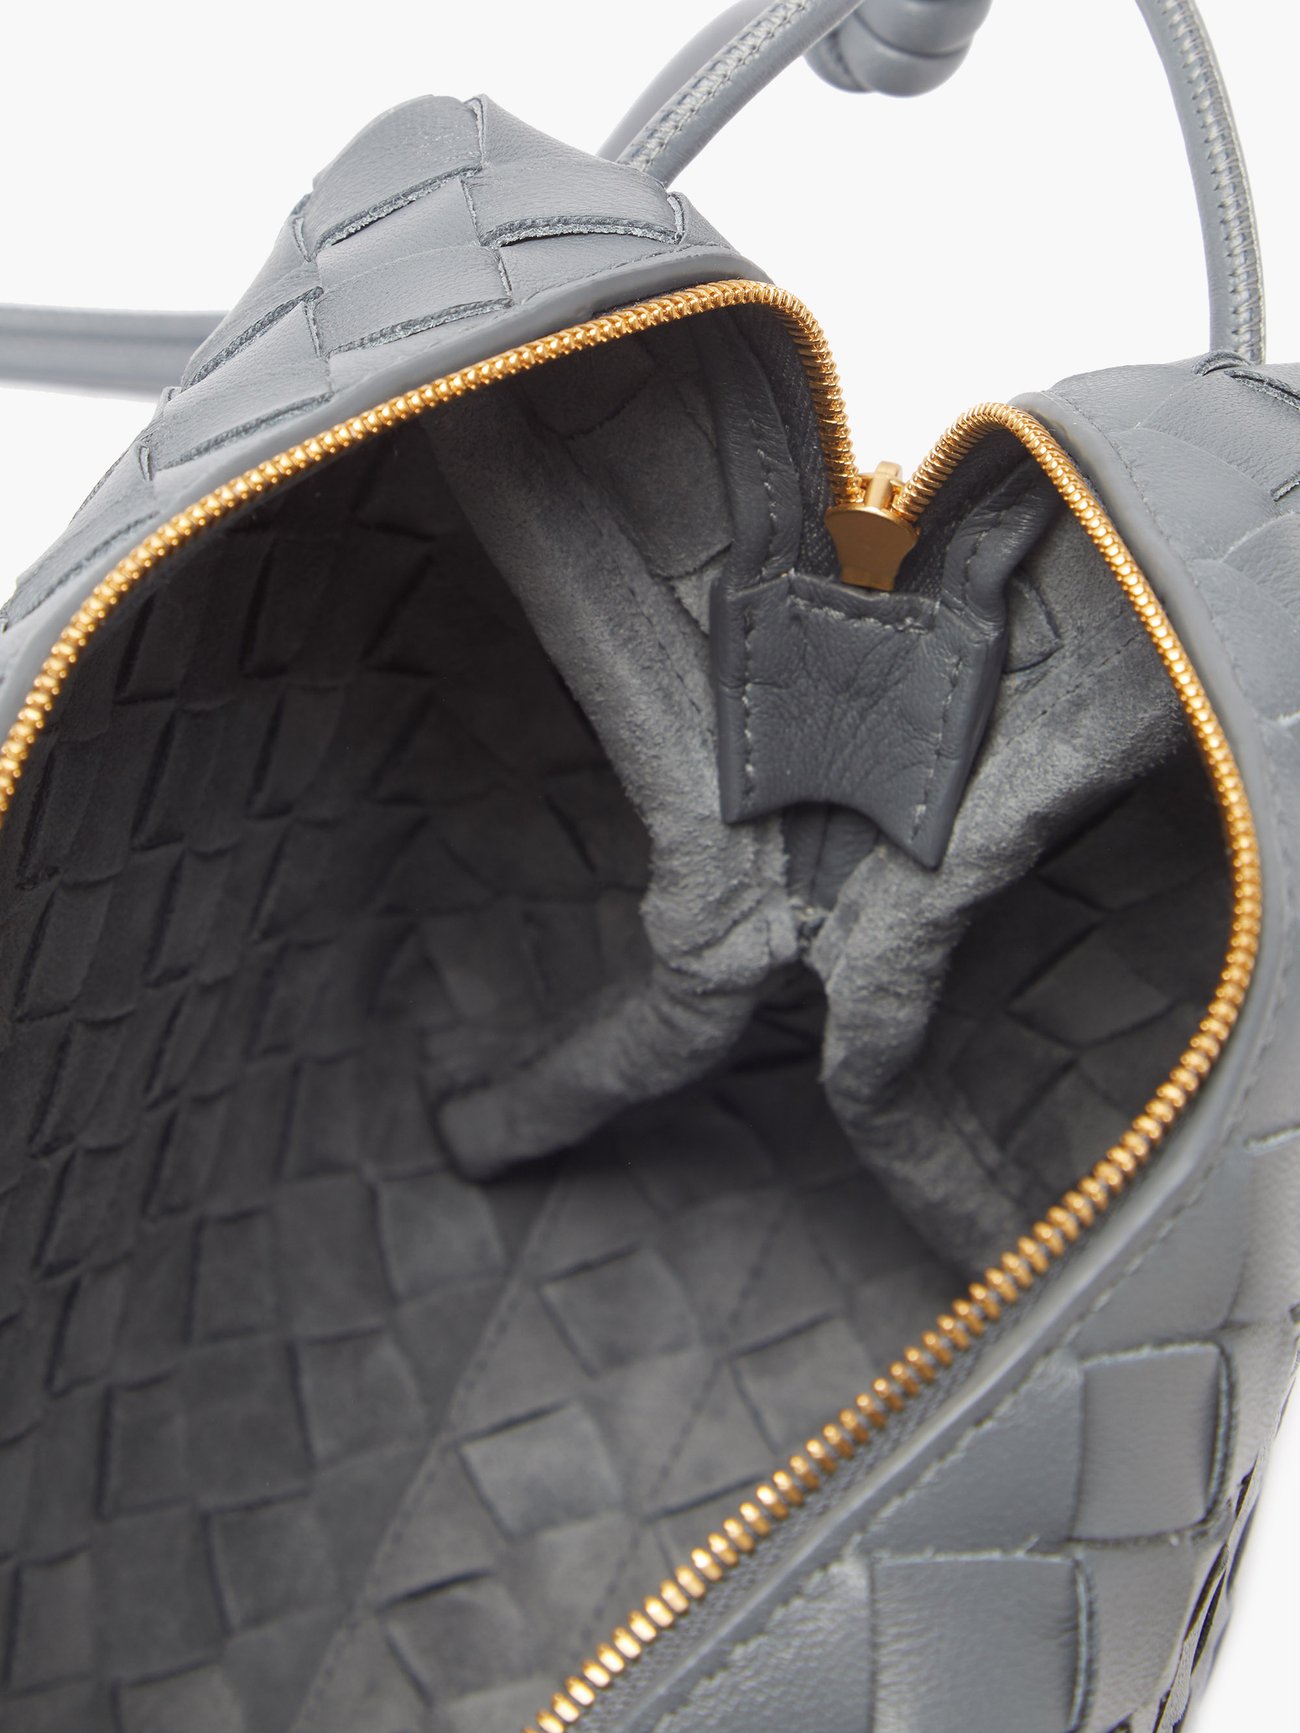 Bottega Veneta Mini Loop Bag in Agate Grey & Muse Brass, Grey. Size all.